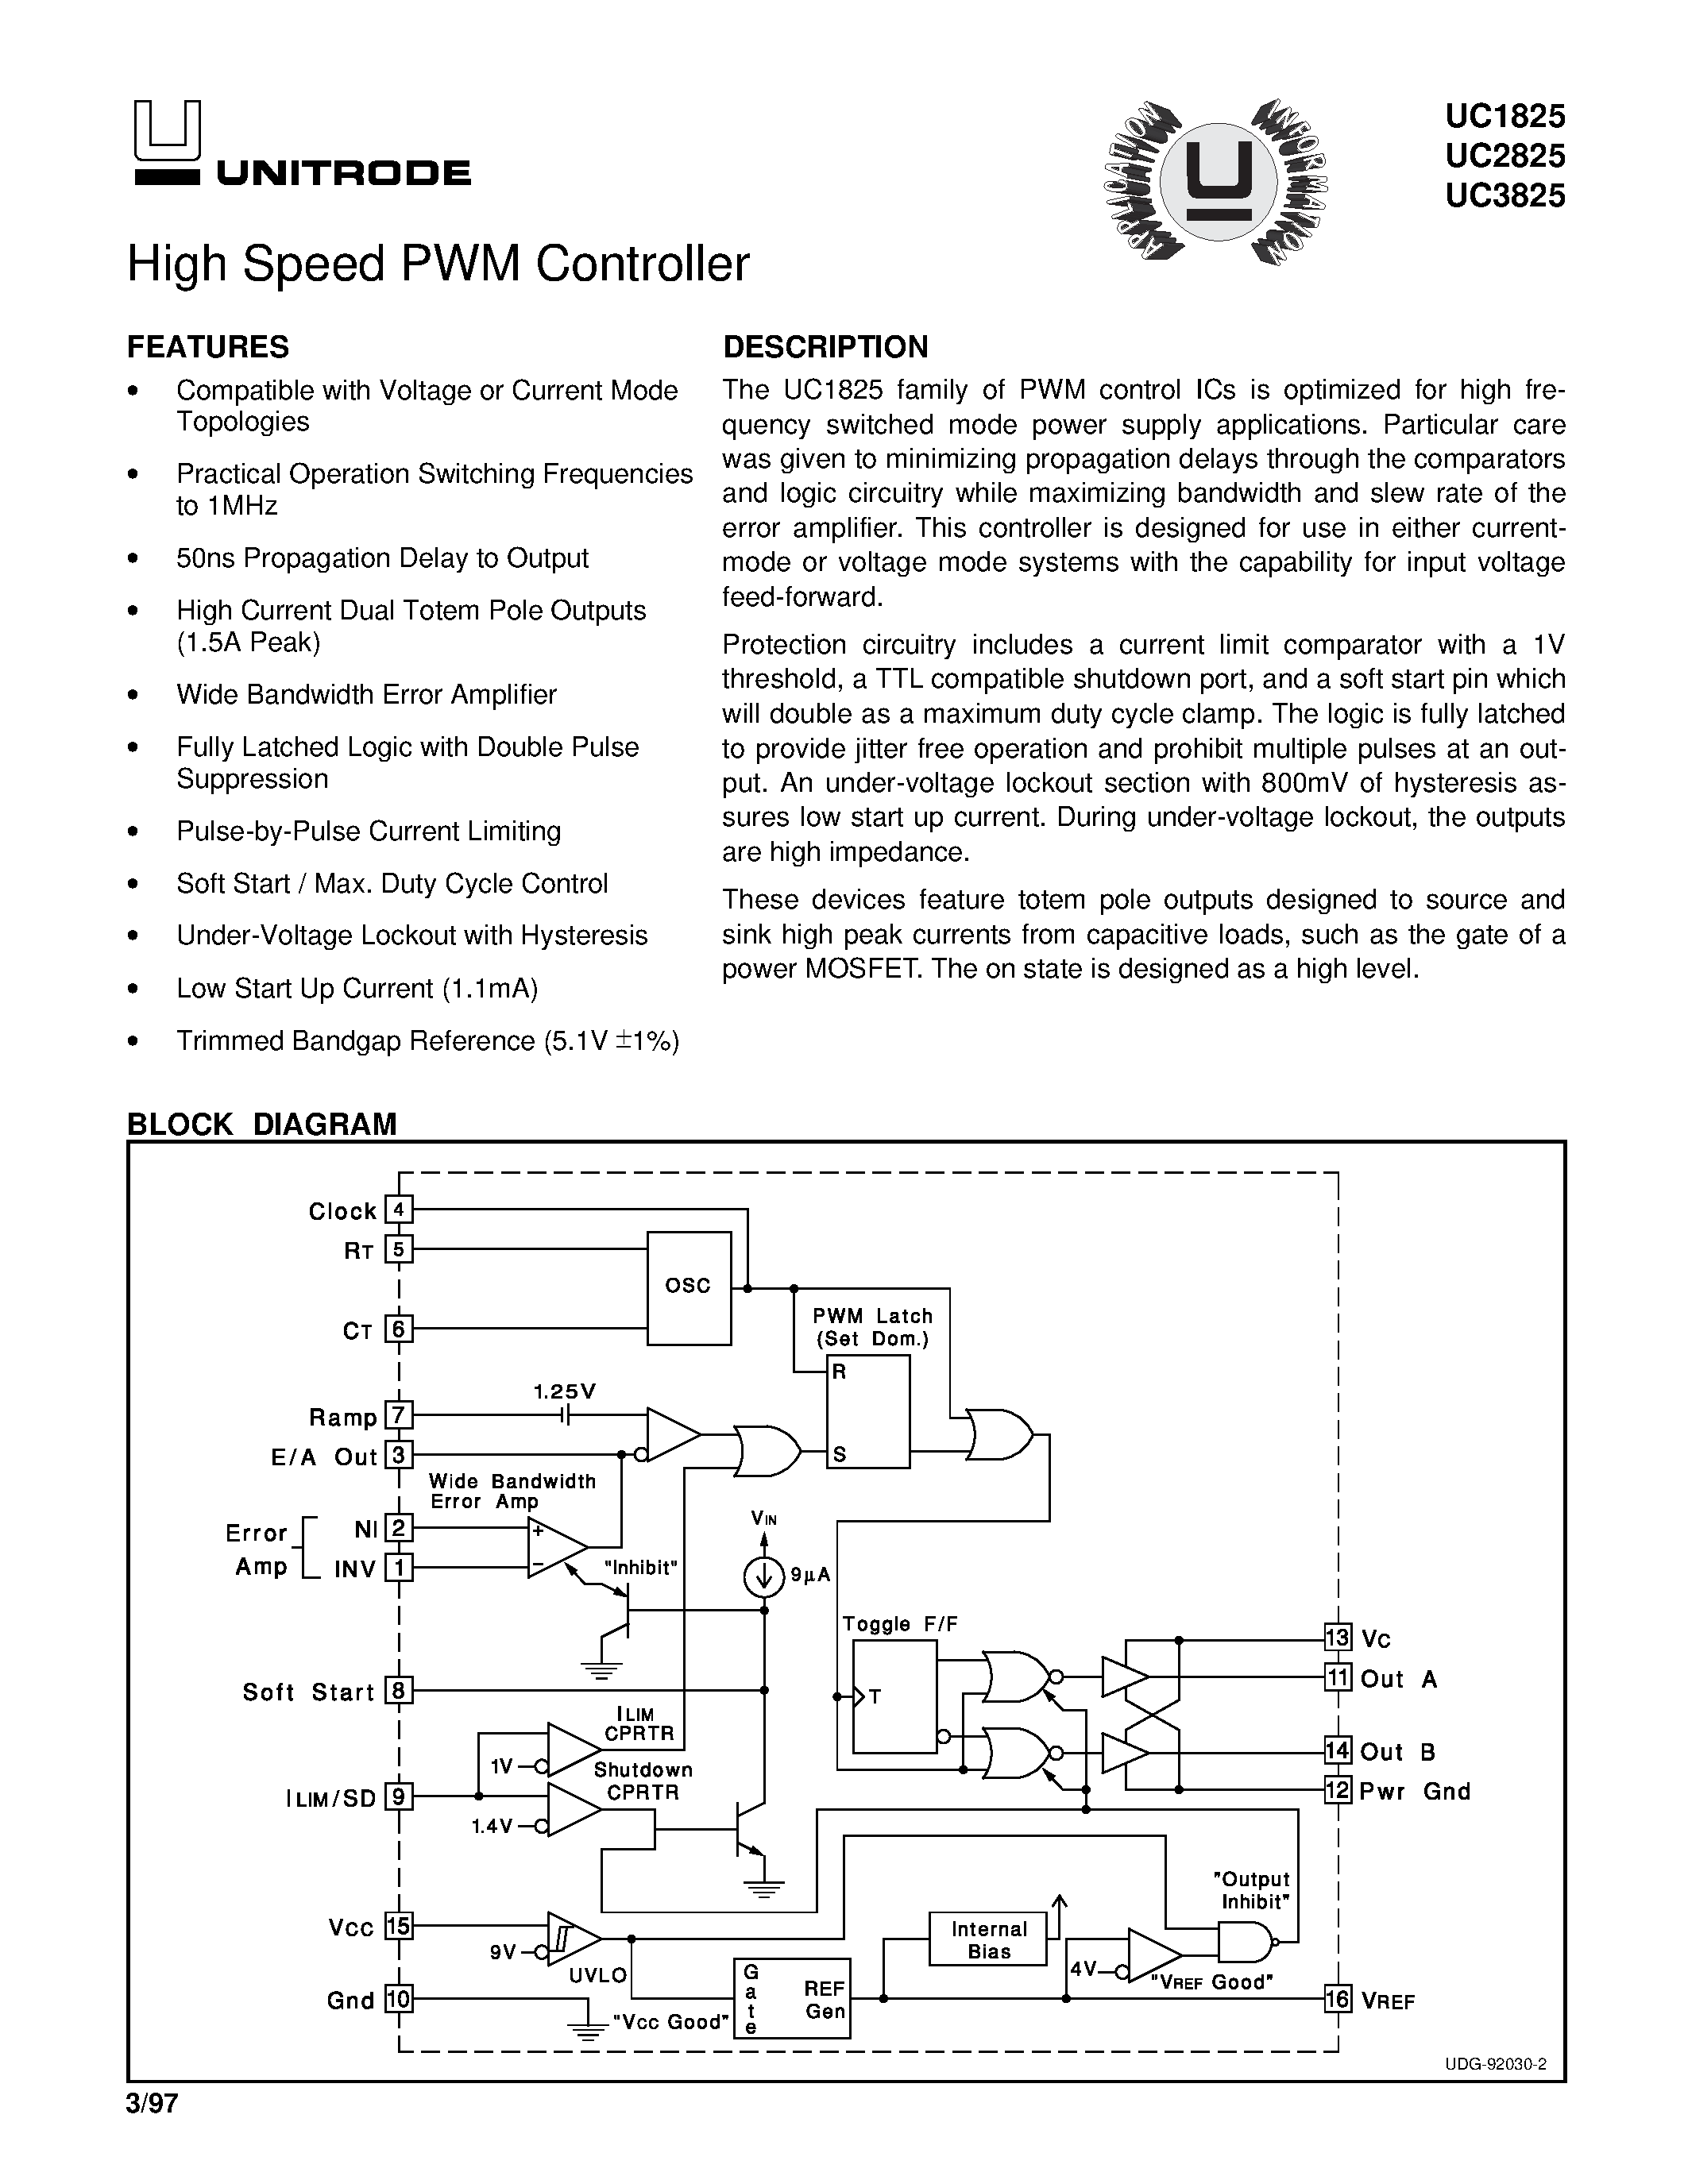 Даташит UC2825 - High Speed PWM Controller страница 1